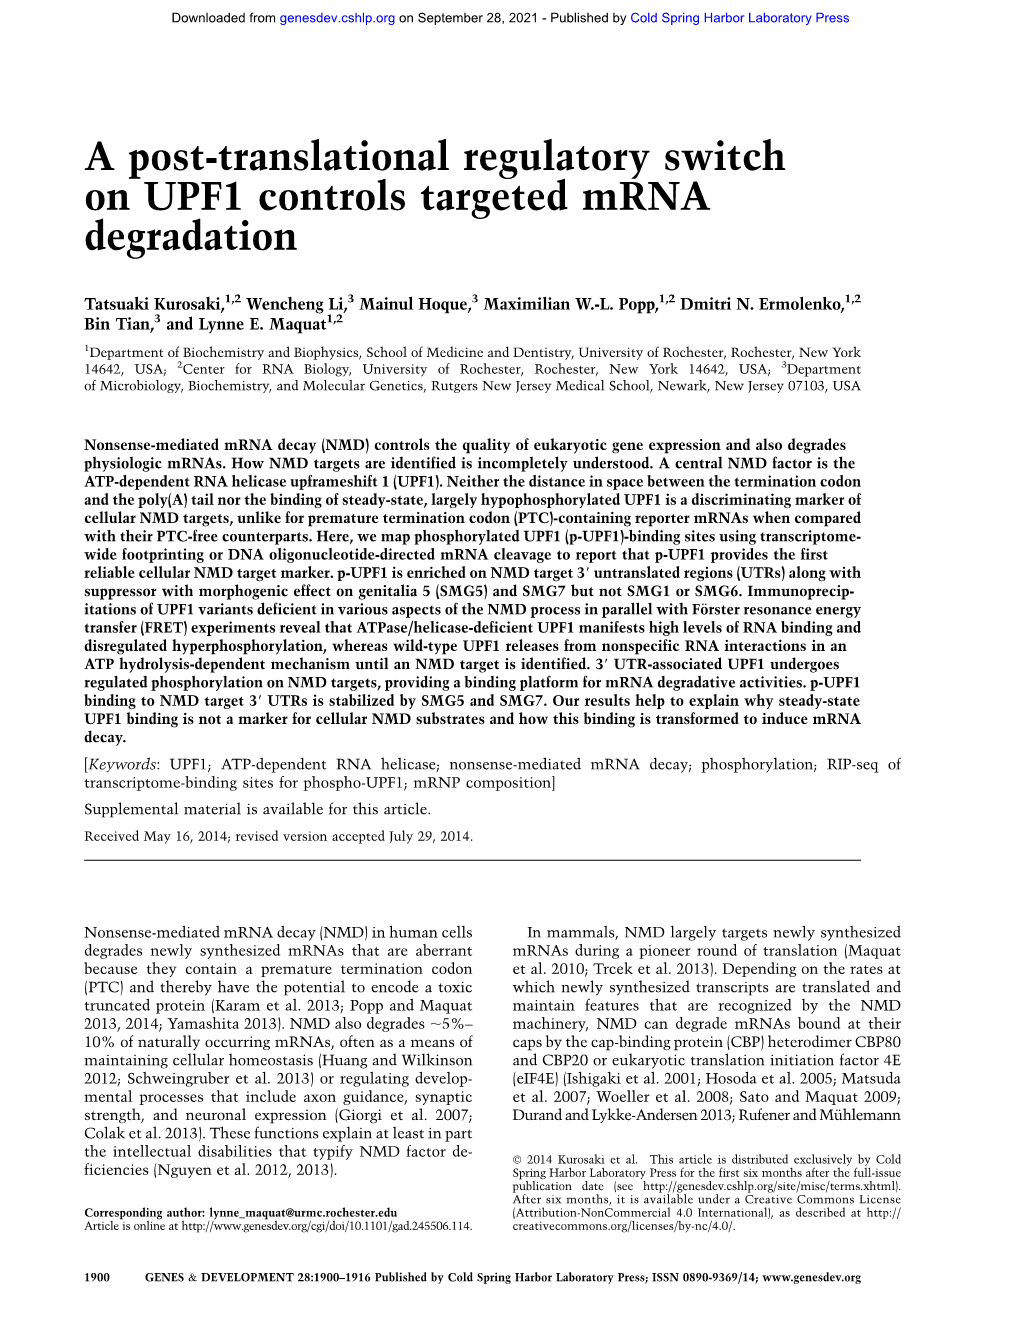 A Post-Translational Regulatory Switch on UPF1 Controls Targeted Mrna Degradation